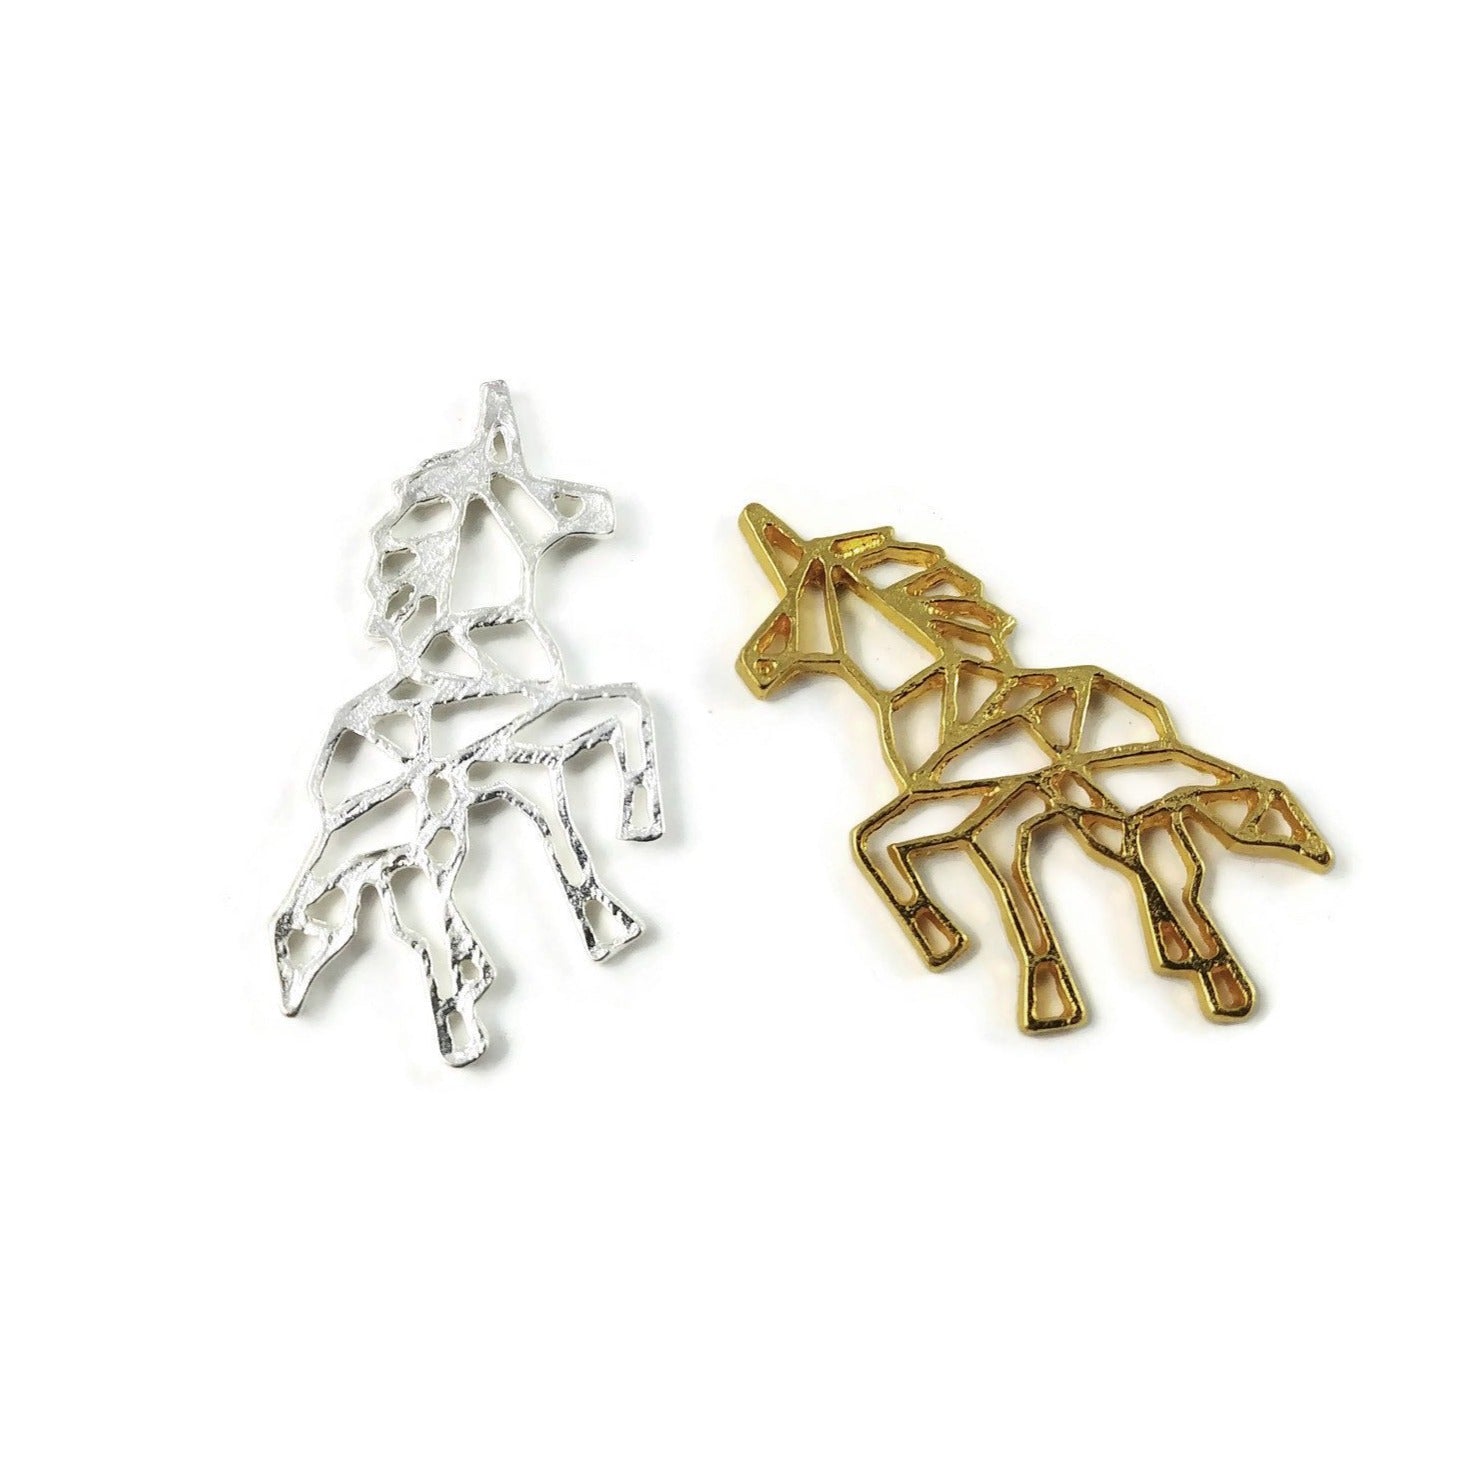 Origami unicorn charm, silver or gold metal unicorn charms